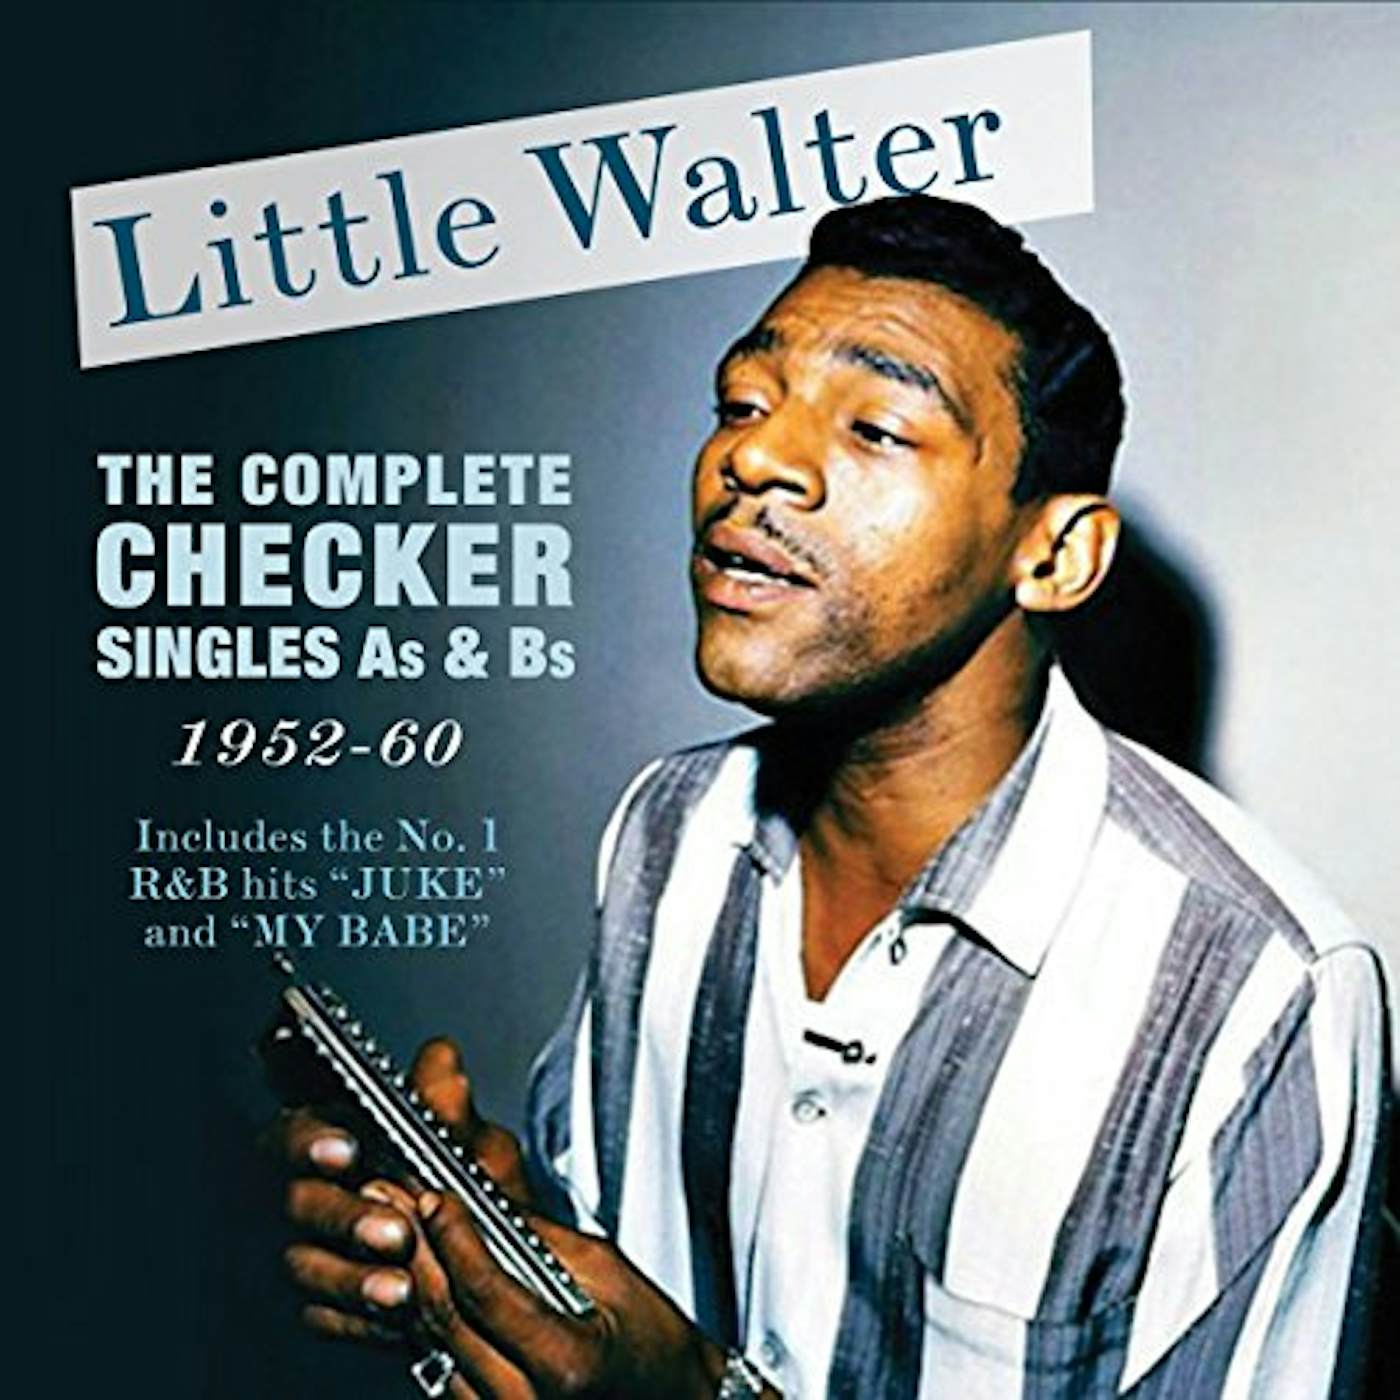 Little Walter COMPLETE CHECKER SINGLES A'S & B'S 1952-60 CD